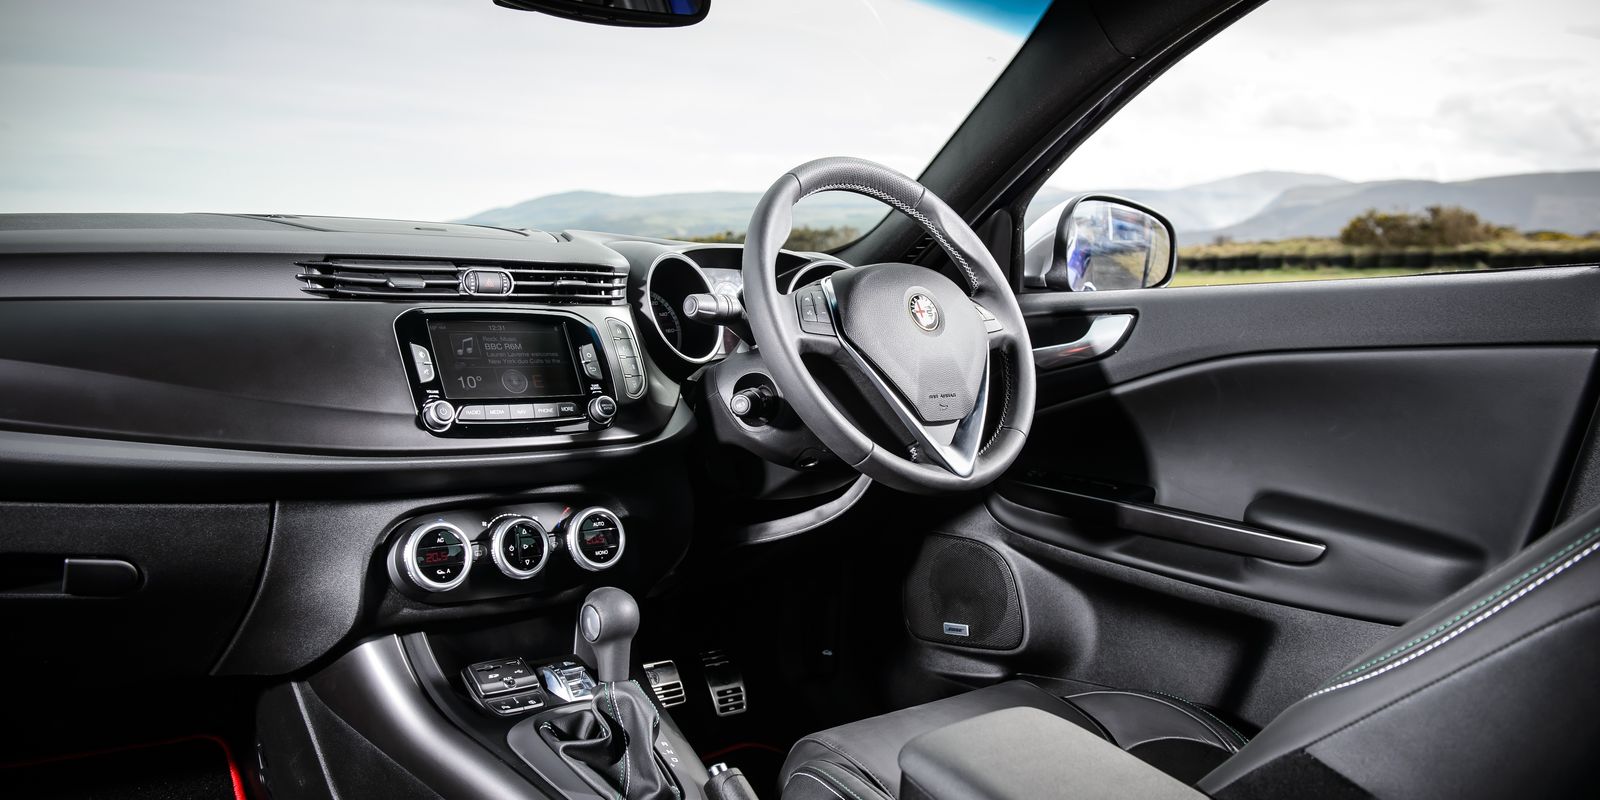 Car Review. ALFA ROMEO Giulietta. Stylish and small - Littlegate